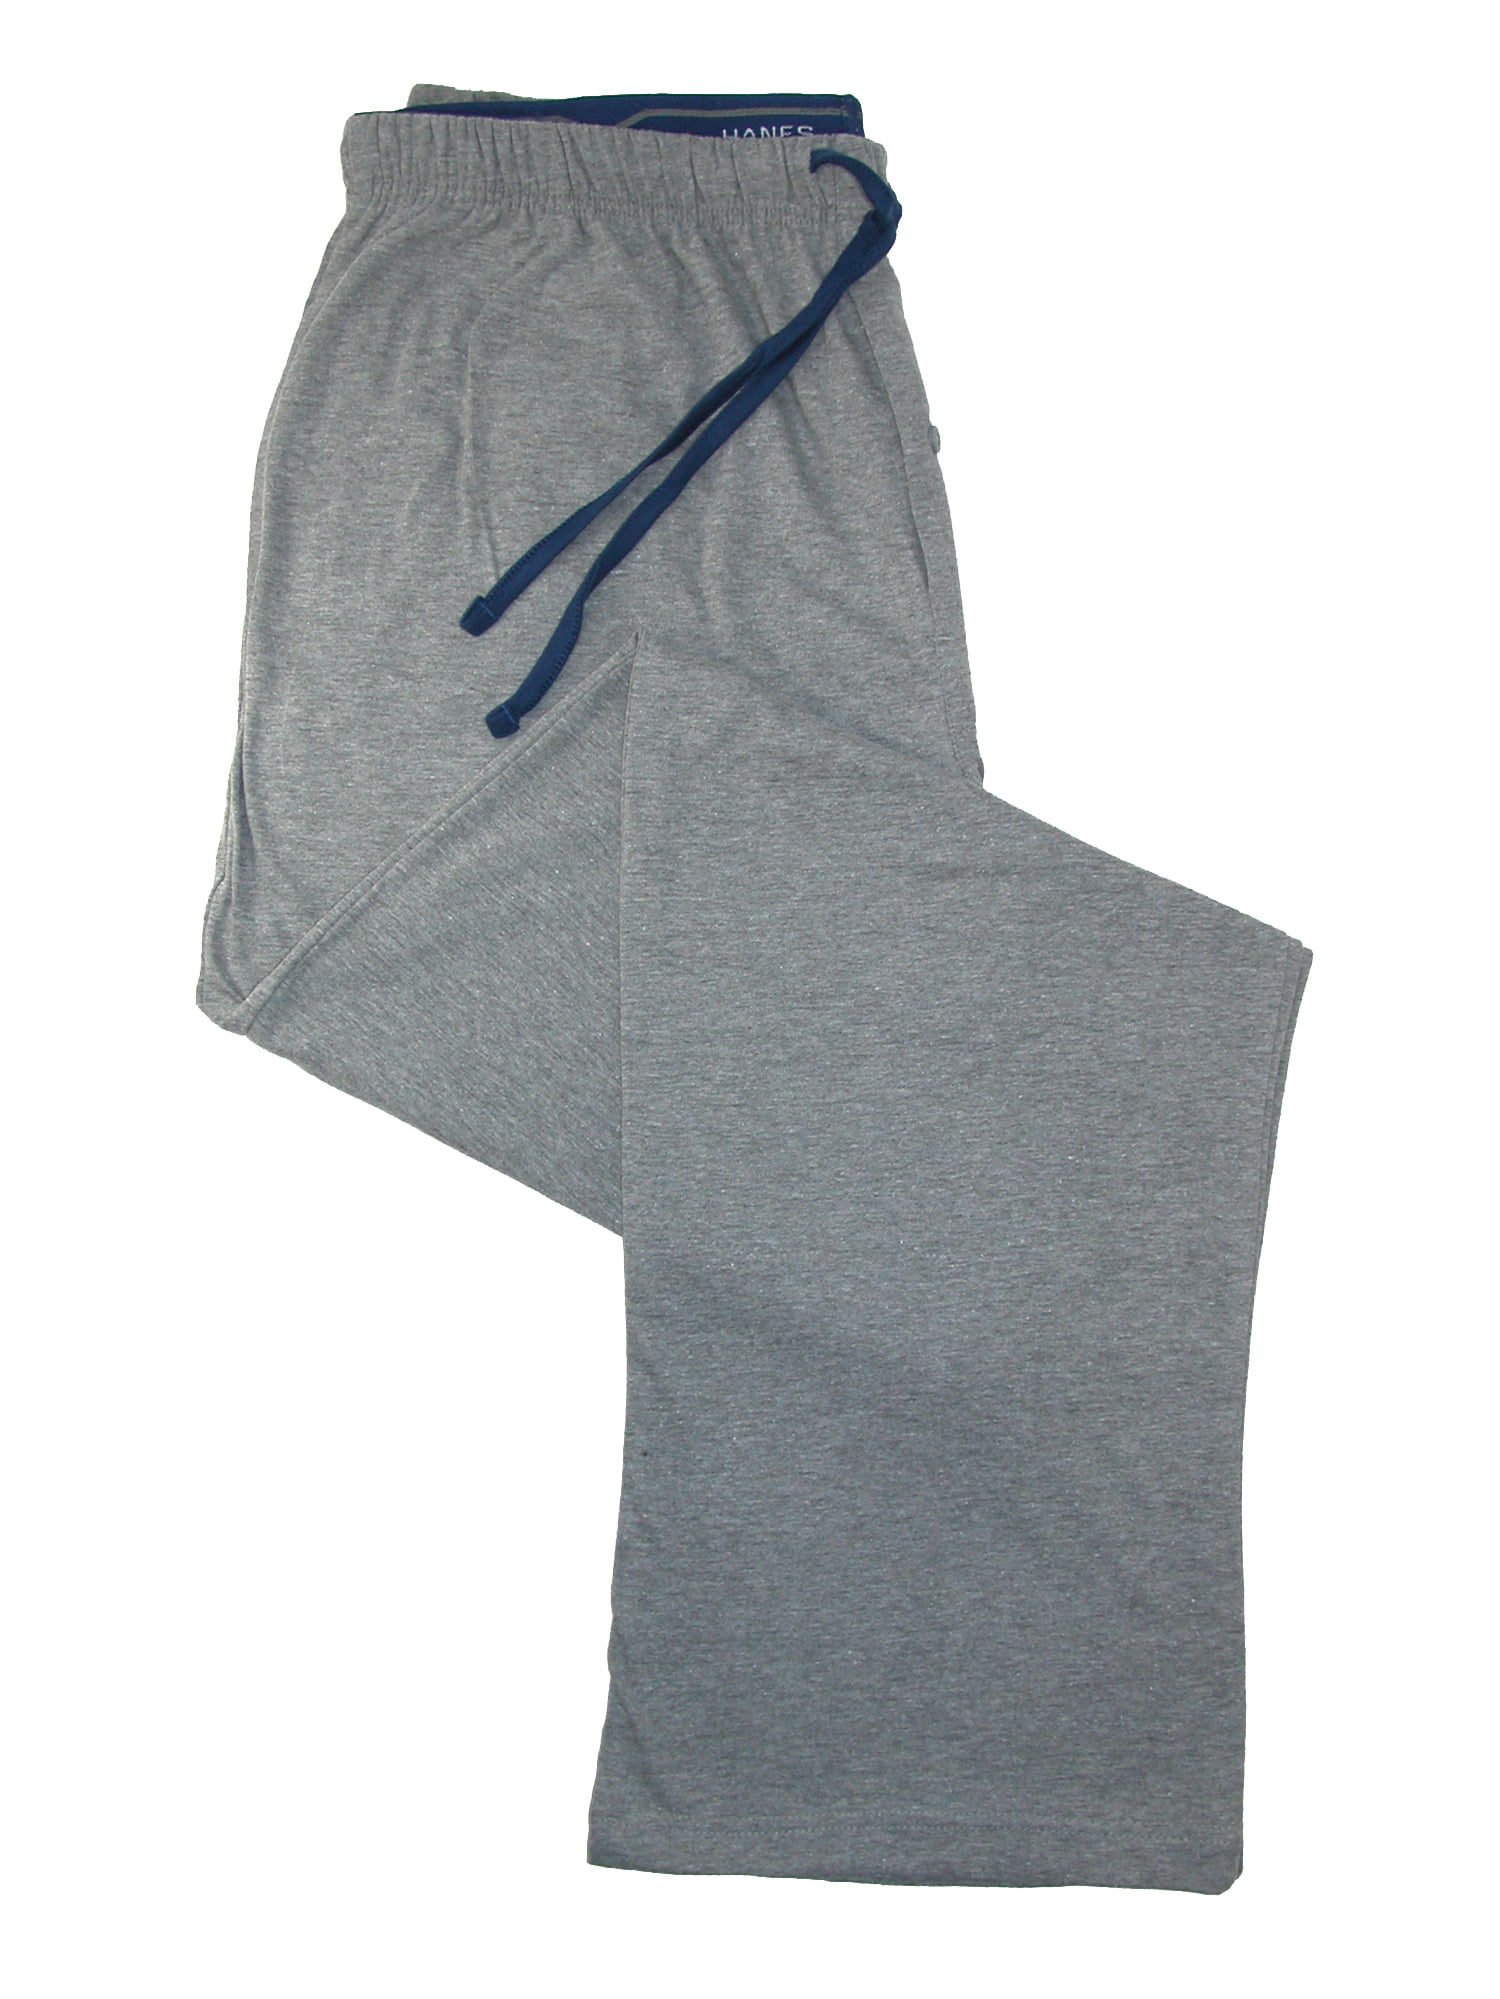 Hanes - Hanes X Temp Knit Pajama Pant (Men's Big & Tall) - Walmart.com ...